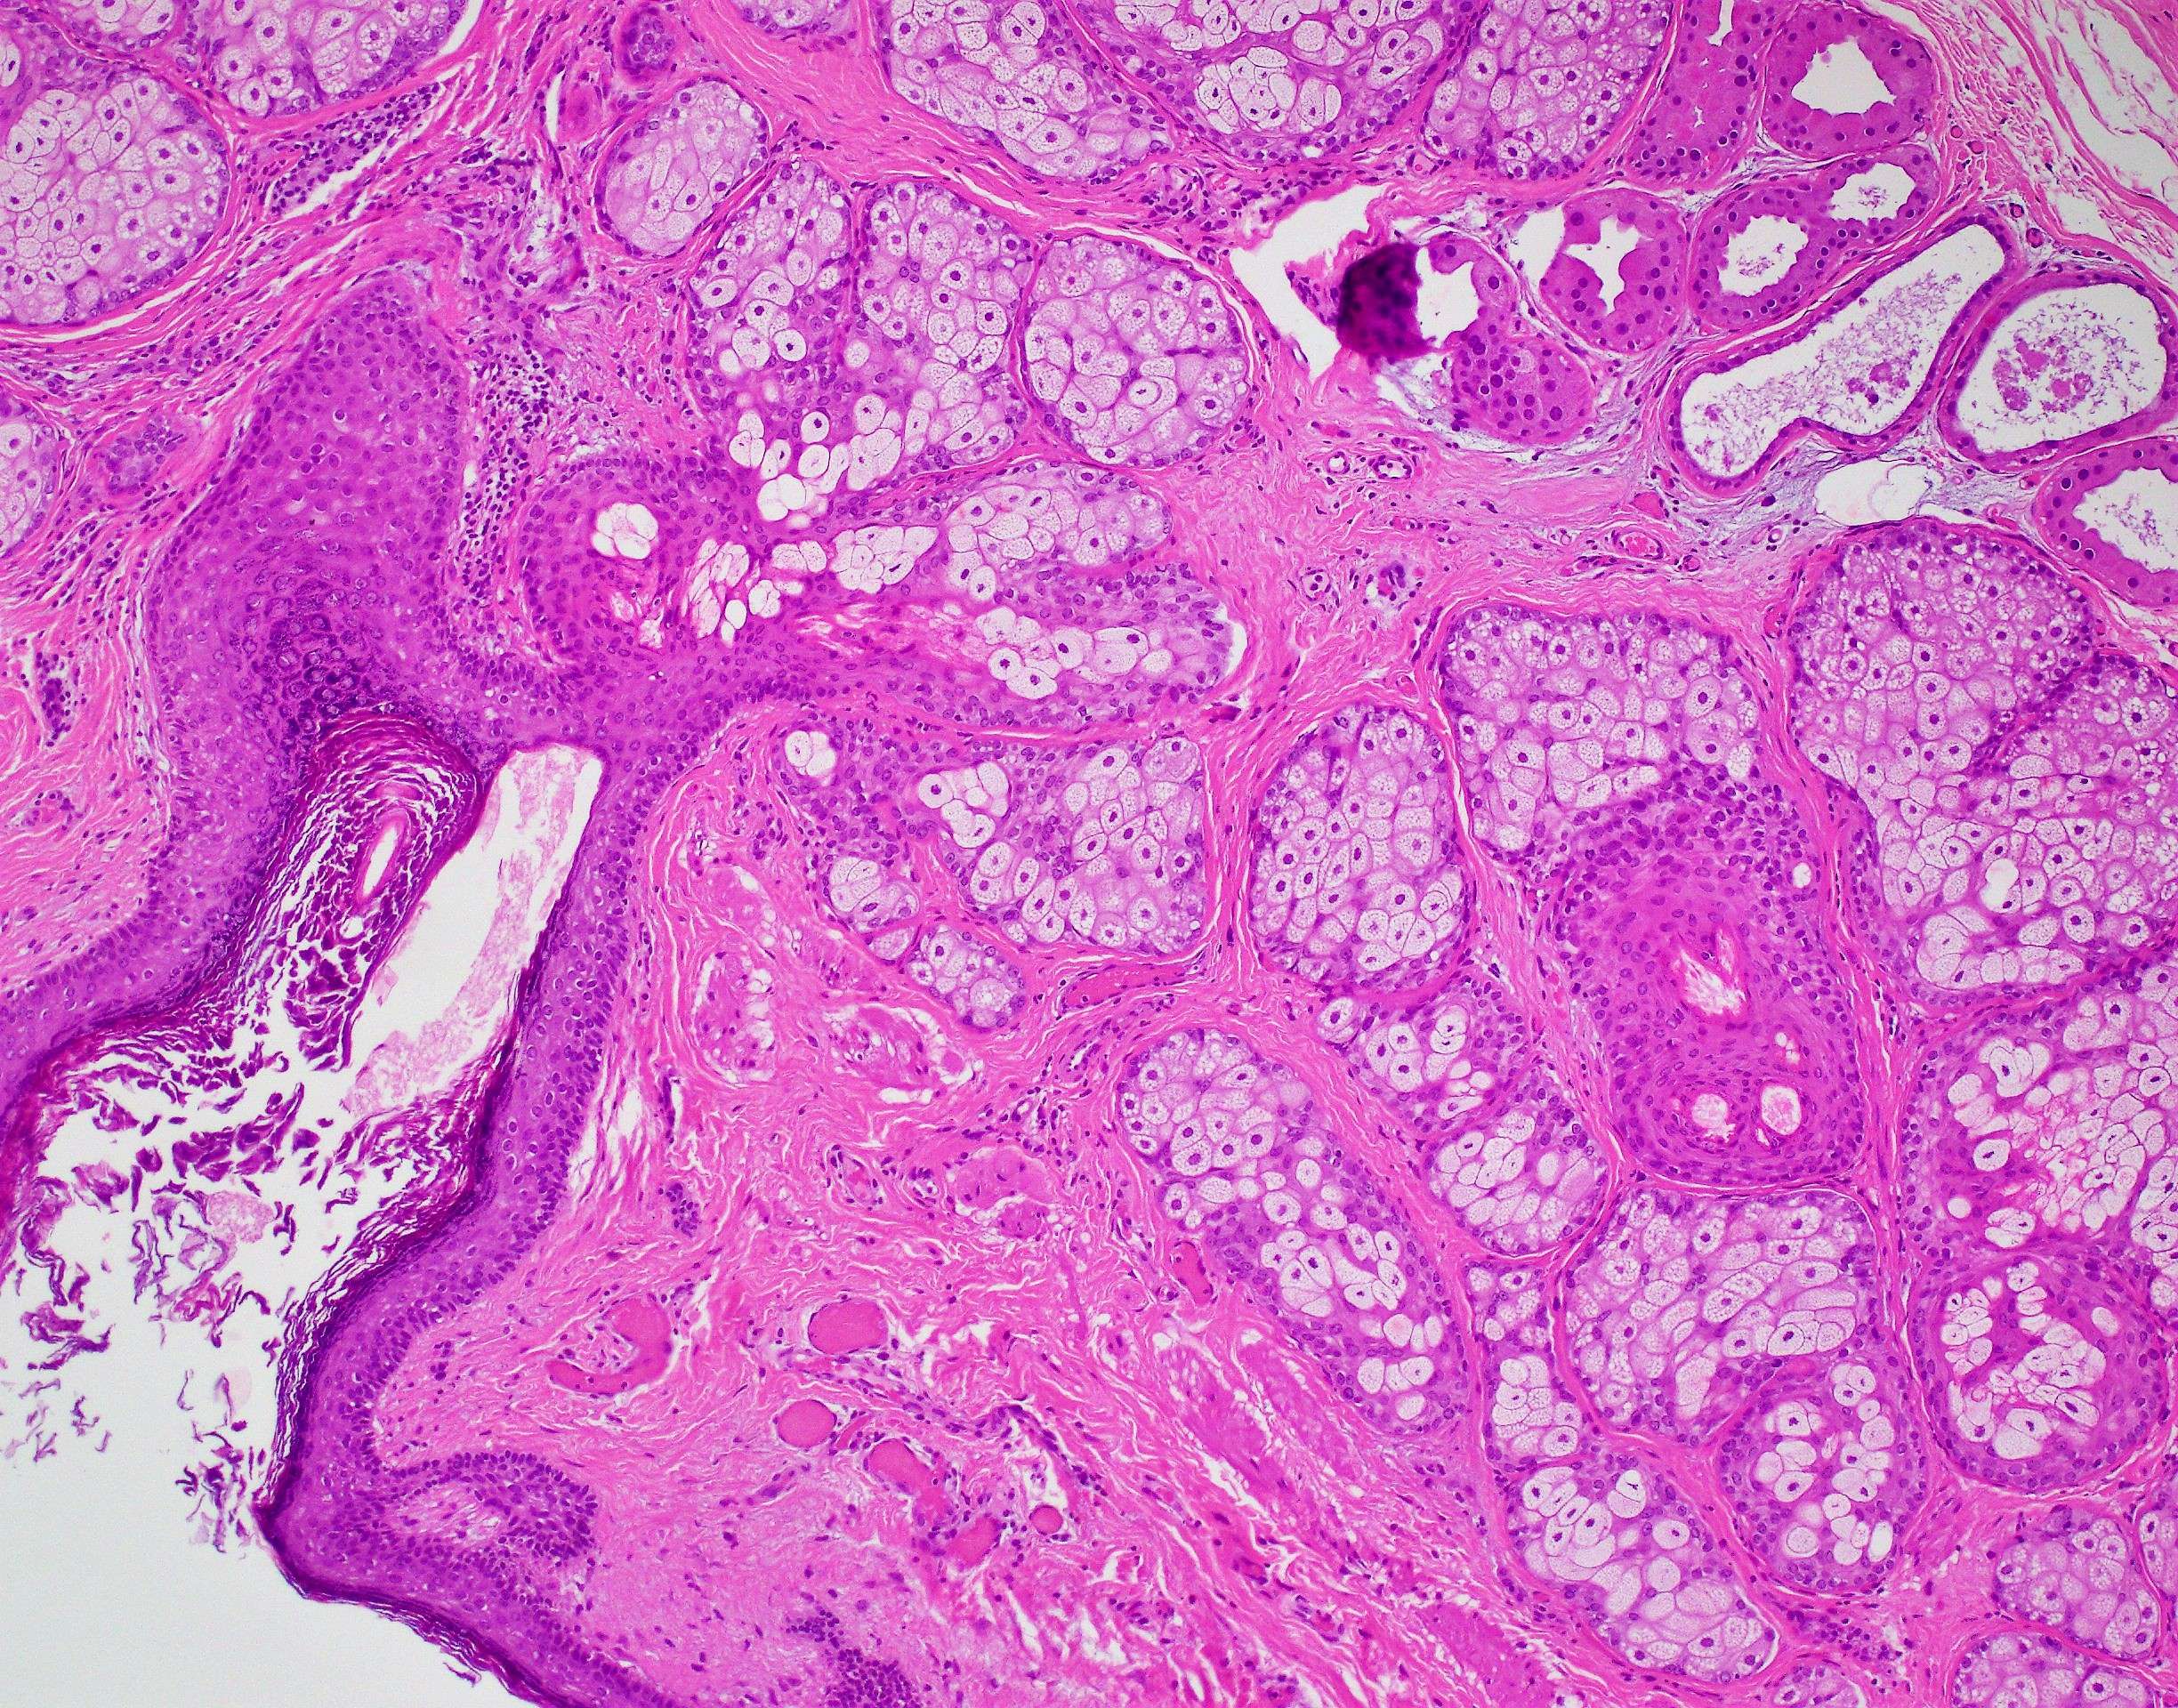 Cystic mature teratoma 10x